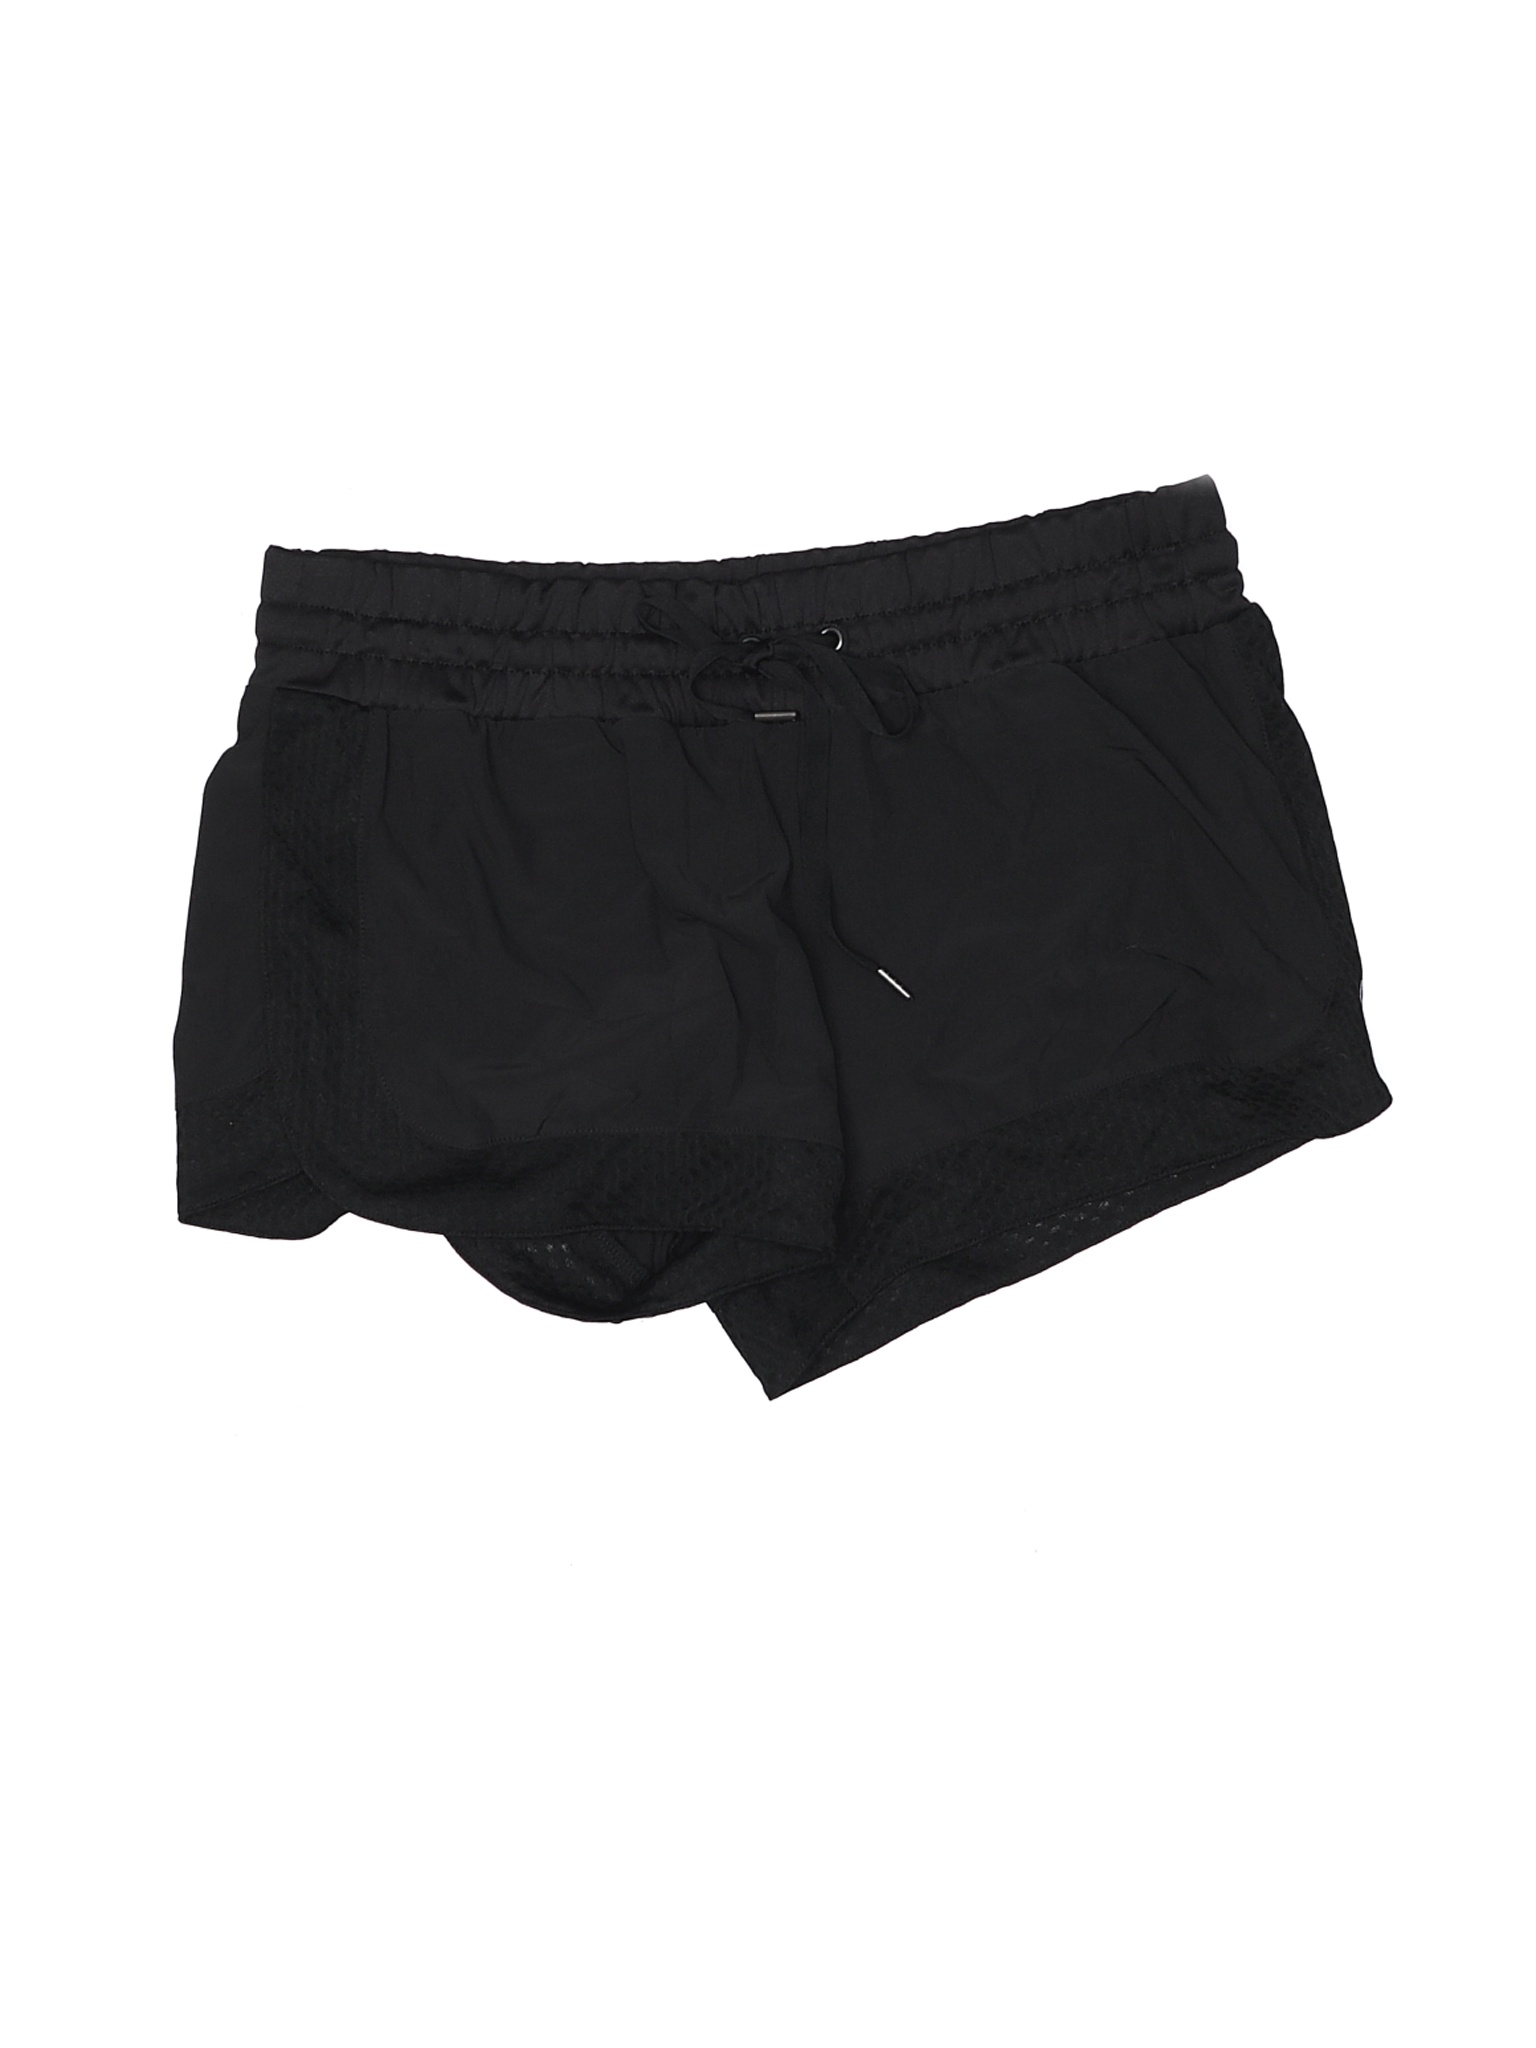 Gap Fit Women Black Athletic Shorts S | eBay